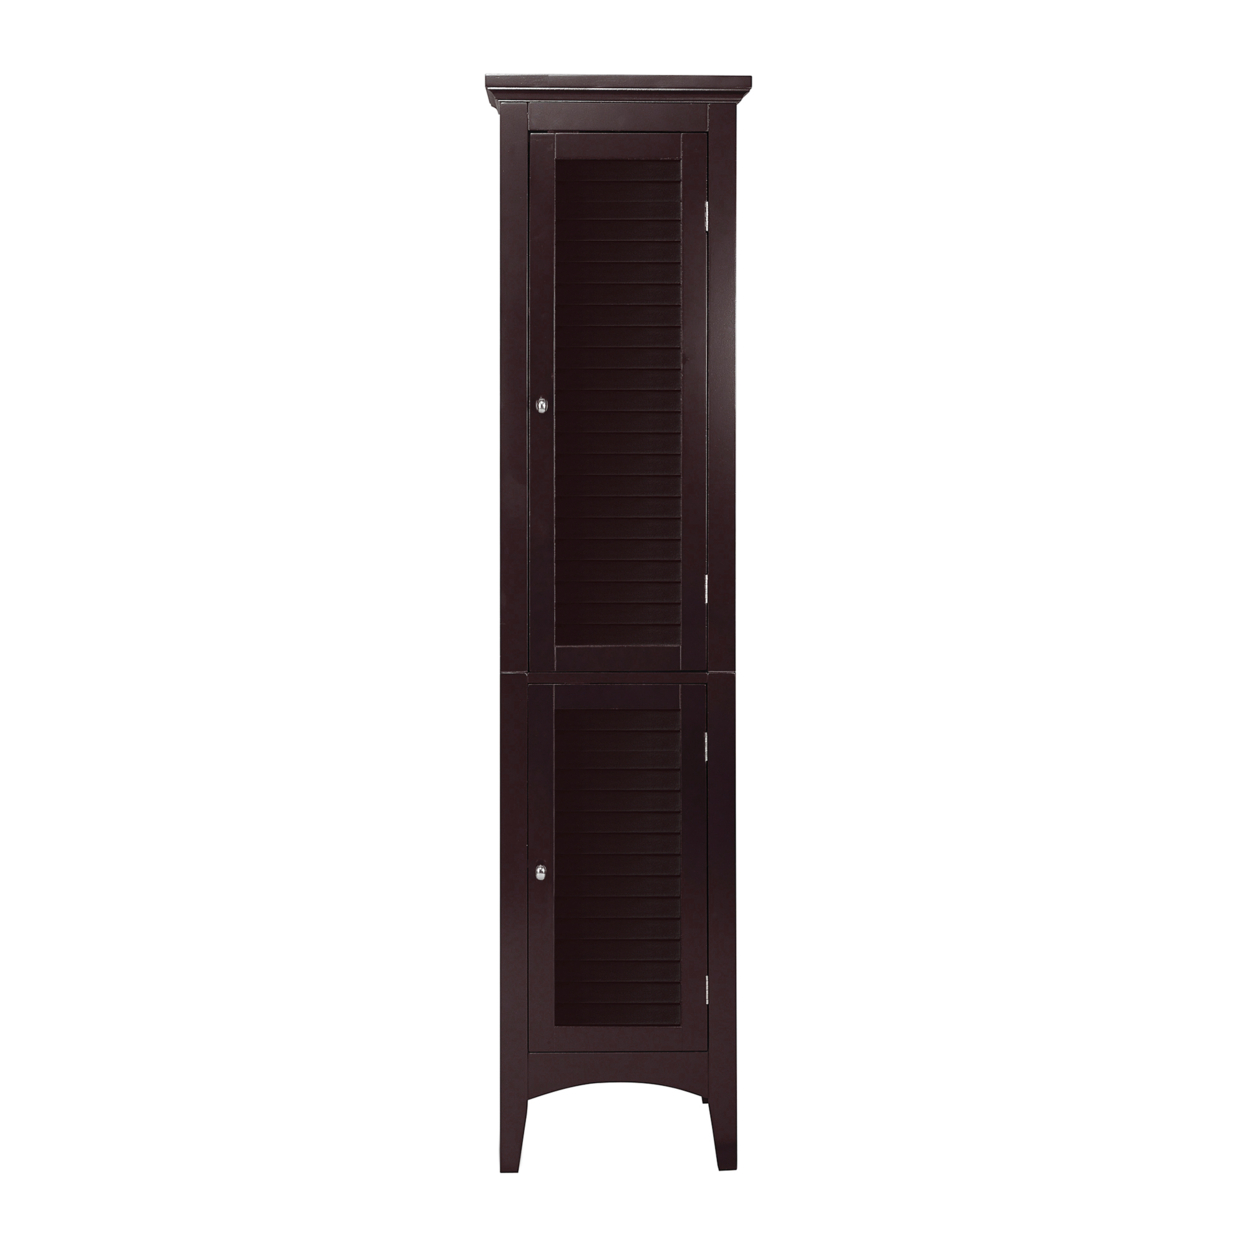 Elegant Home Fashions Wooden Bathroom Cabinet Brown ELG-598